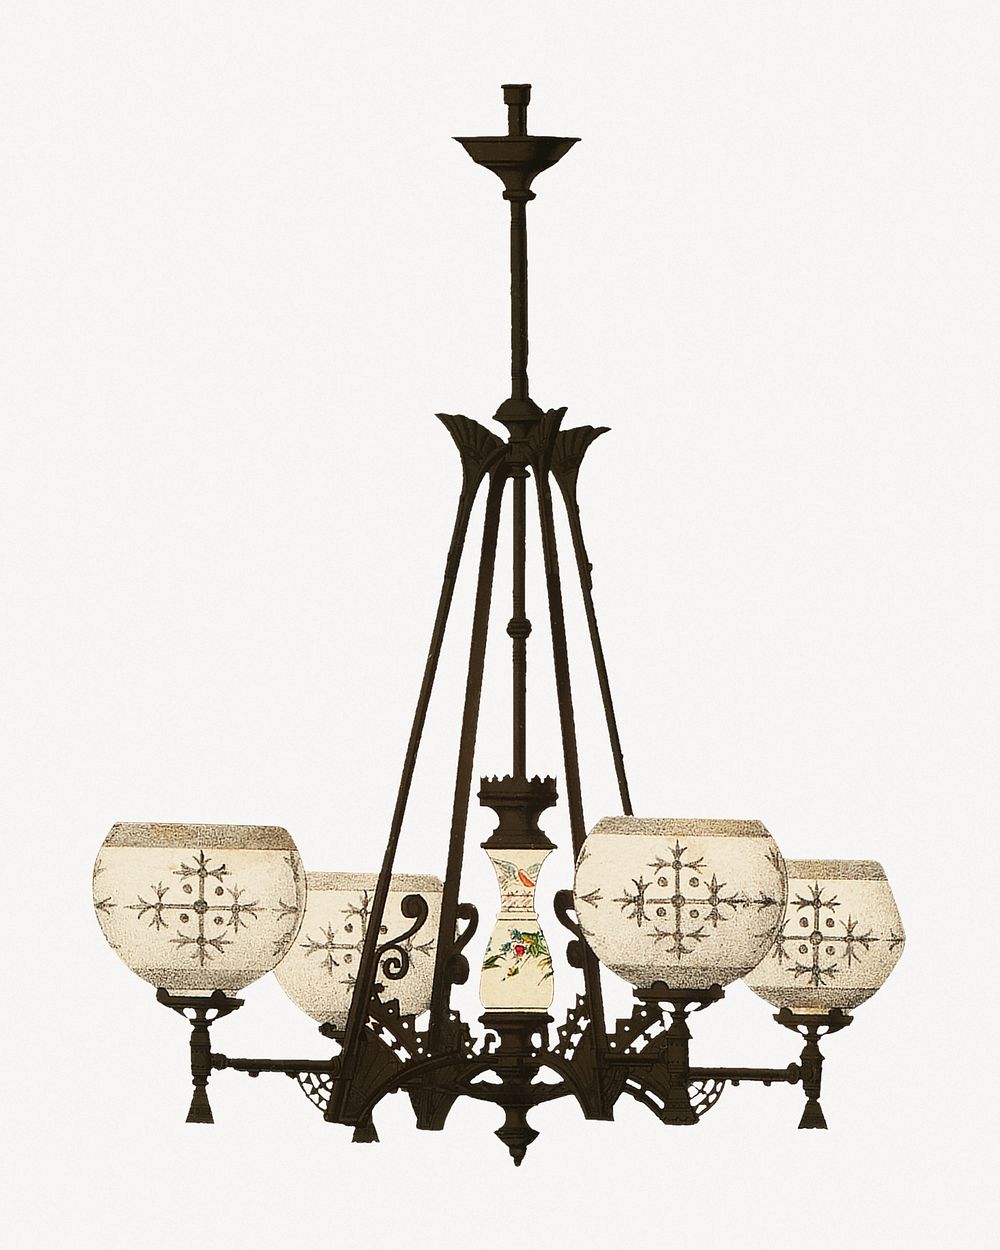 Vintage chandelier, Victorian home decor illustration. Remastered by rawpixel.